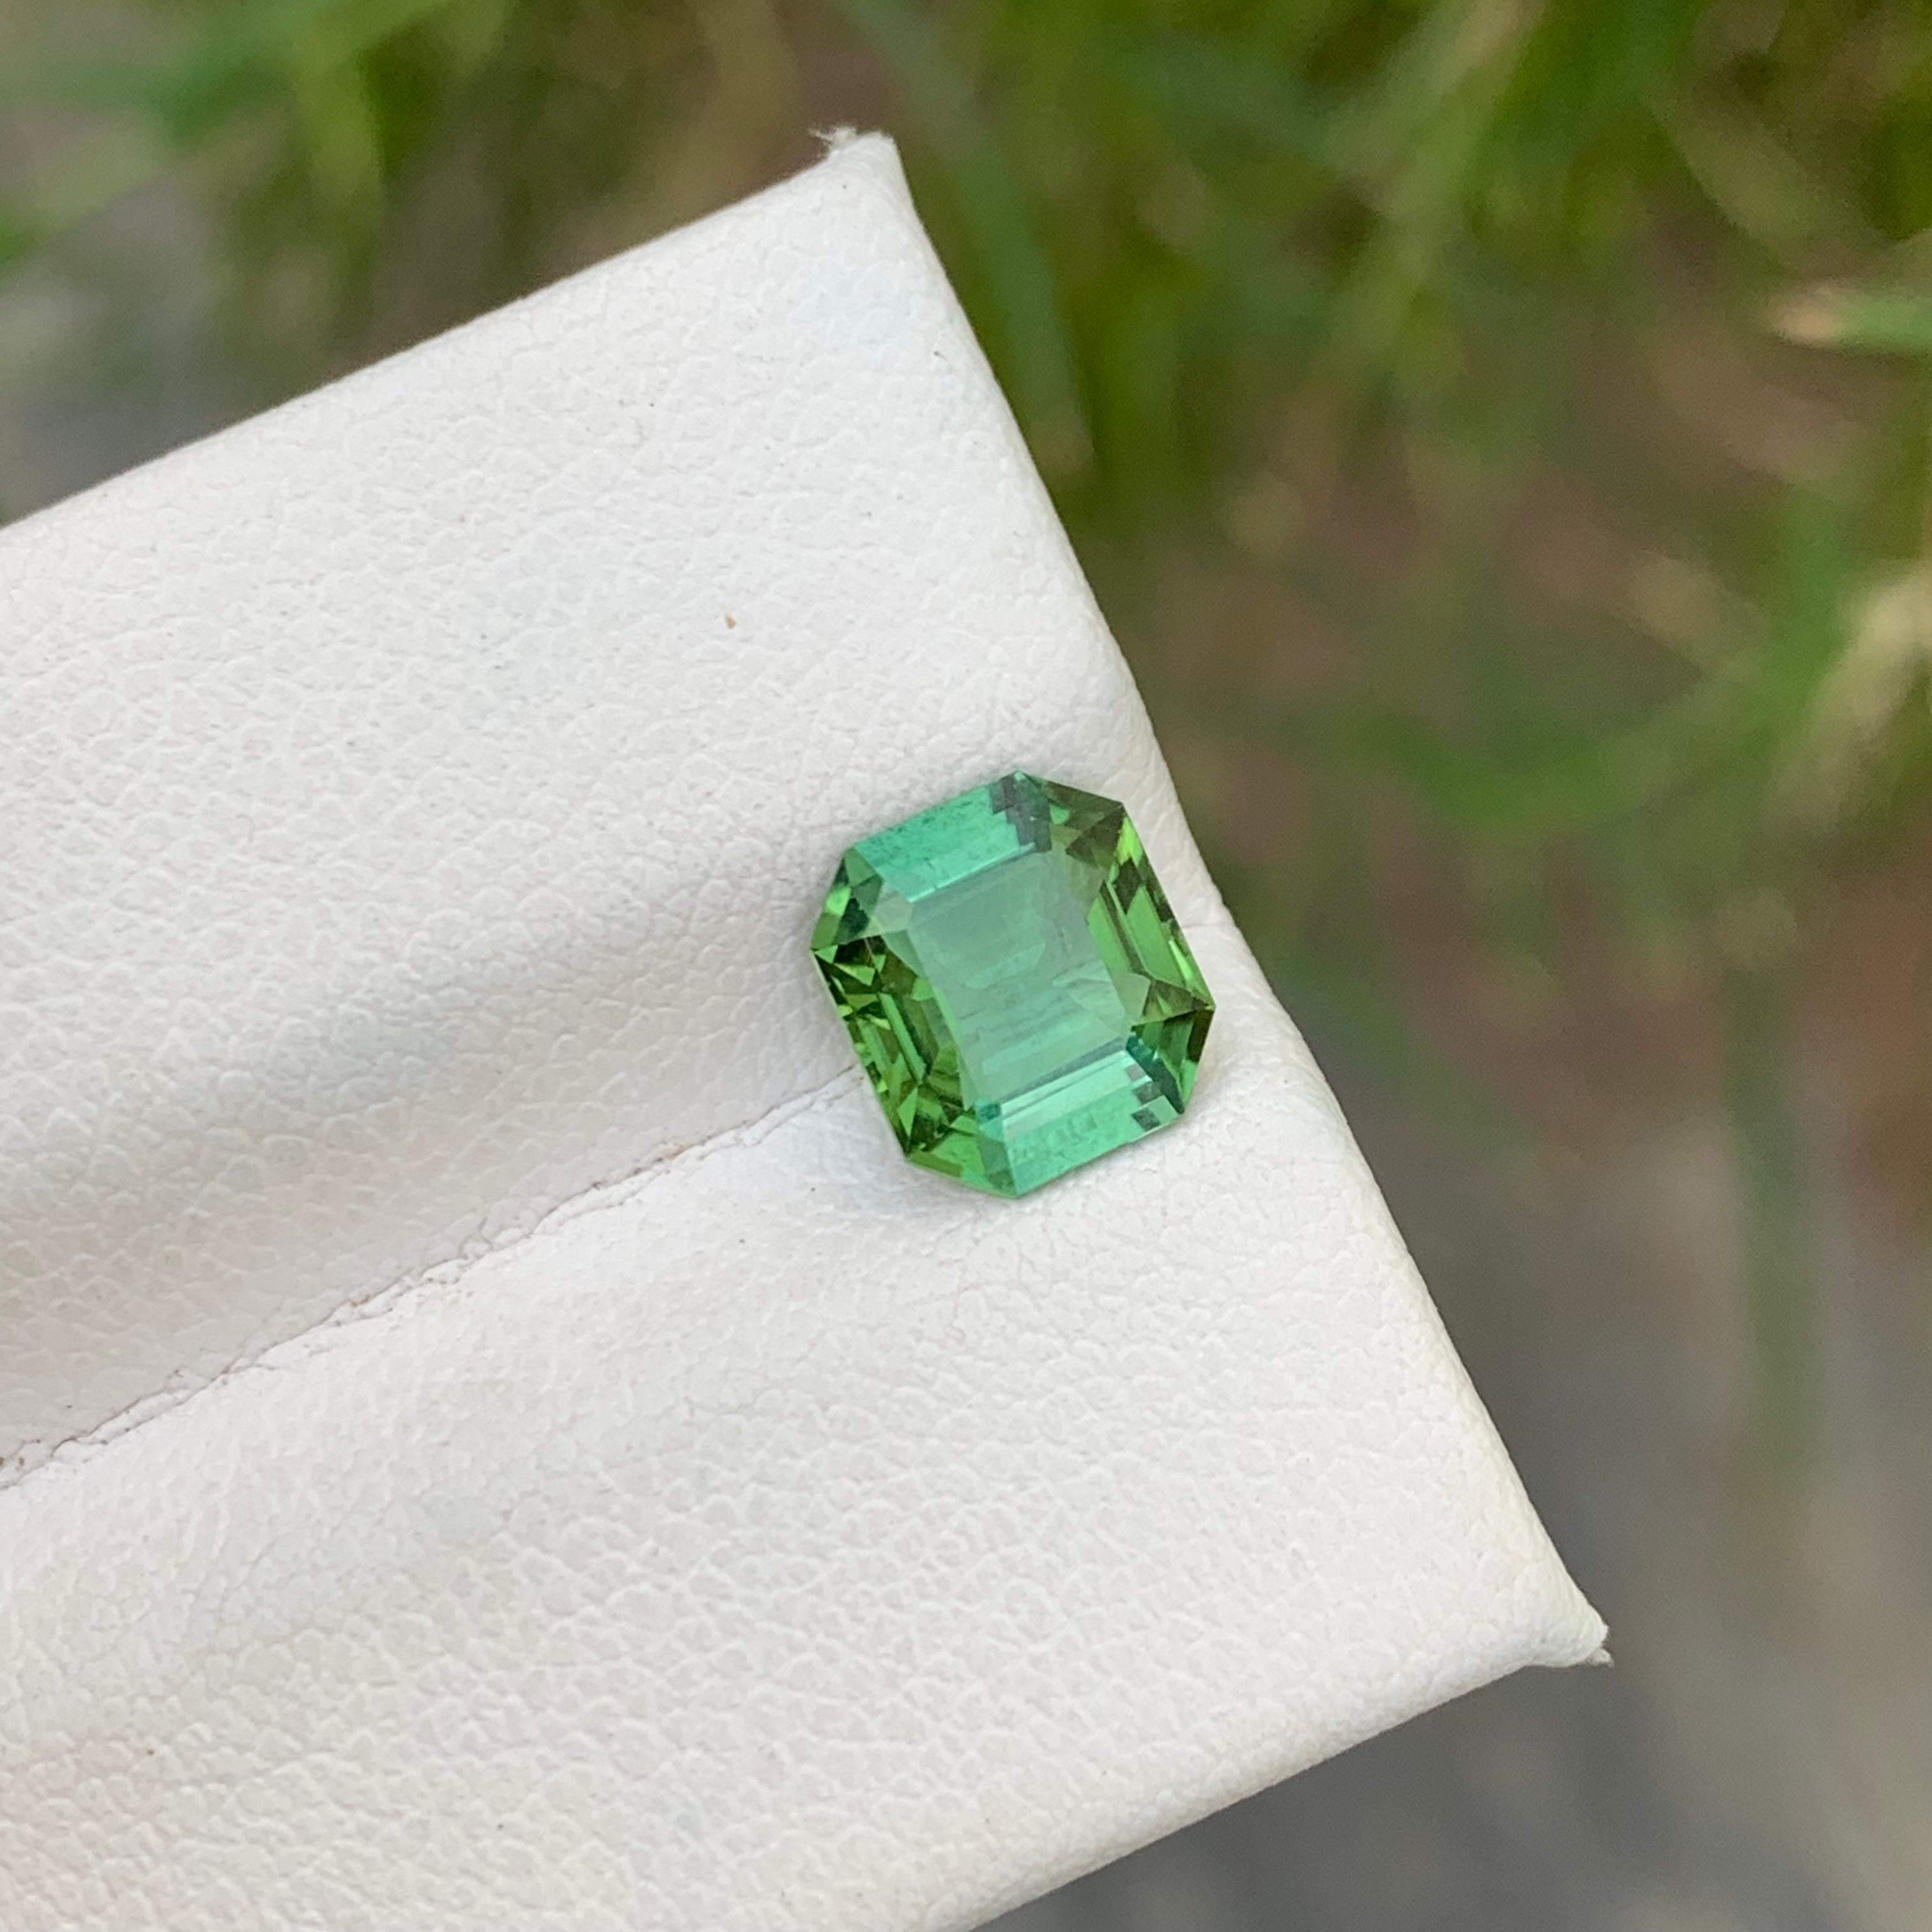 Gorgeous 1.65 Carat Mint Green Tourmaline Emerald Cut Ring Gem from Afghanistan 4